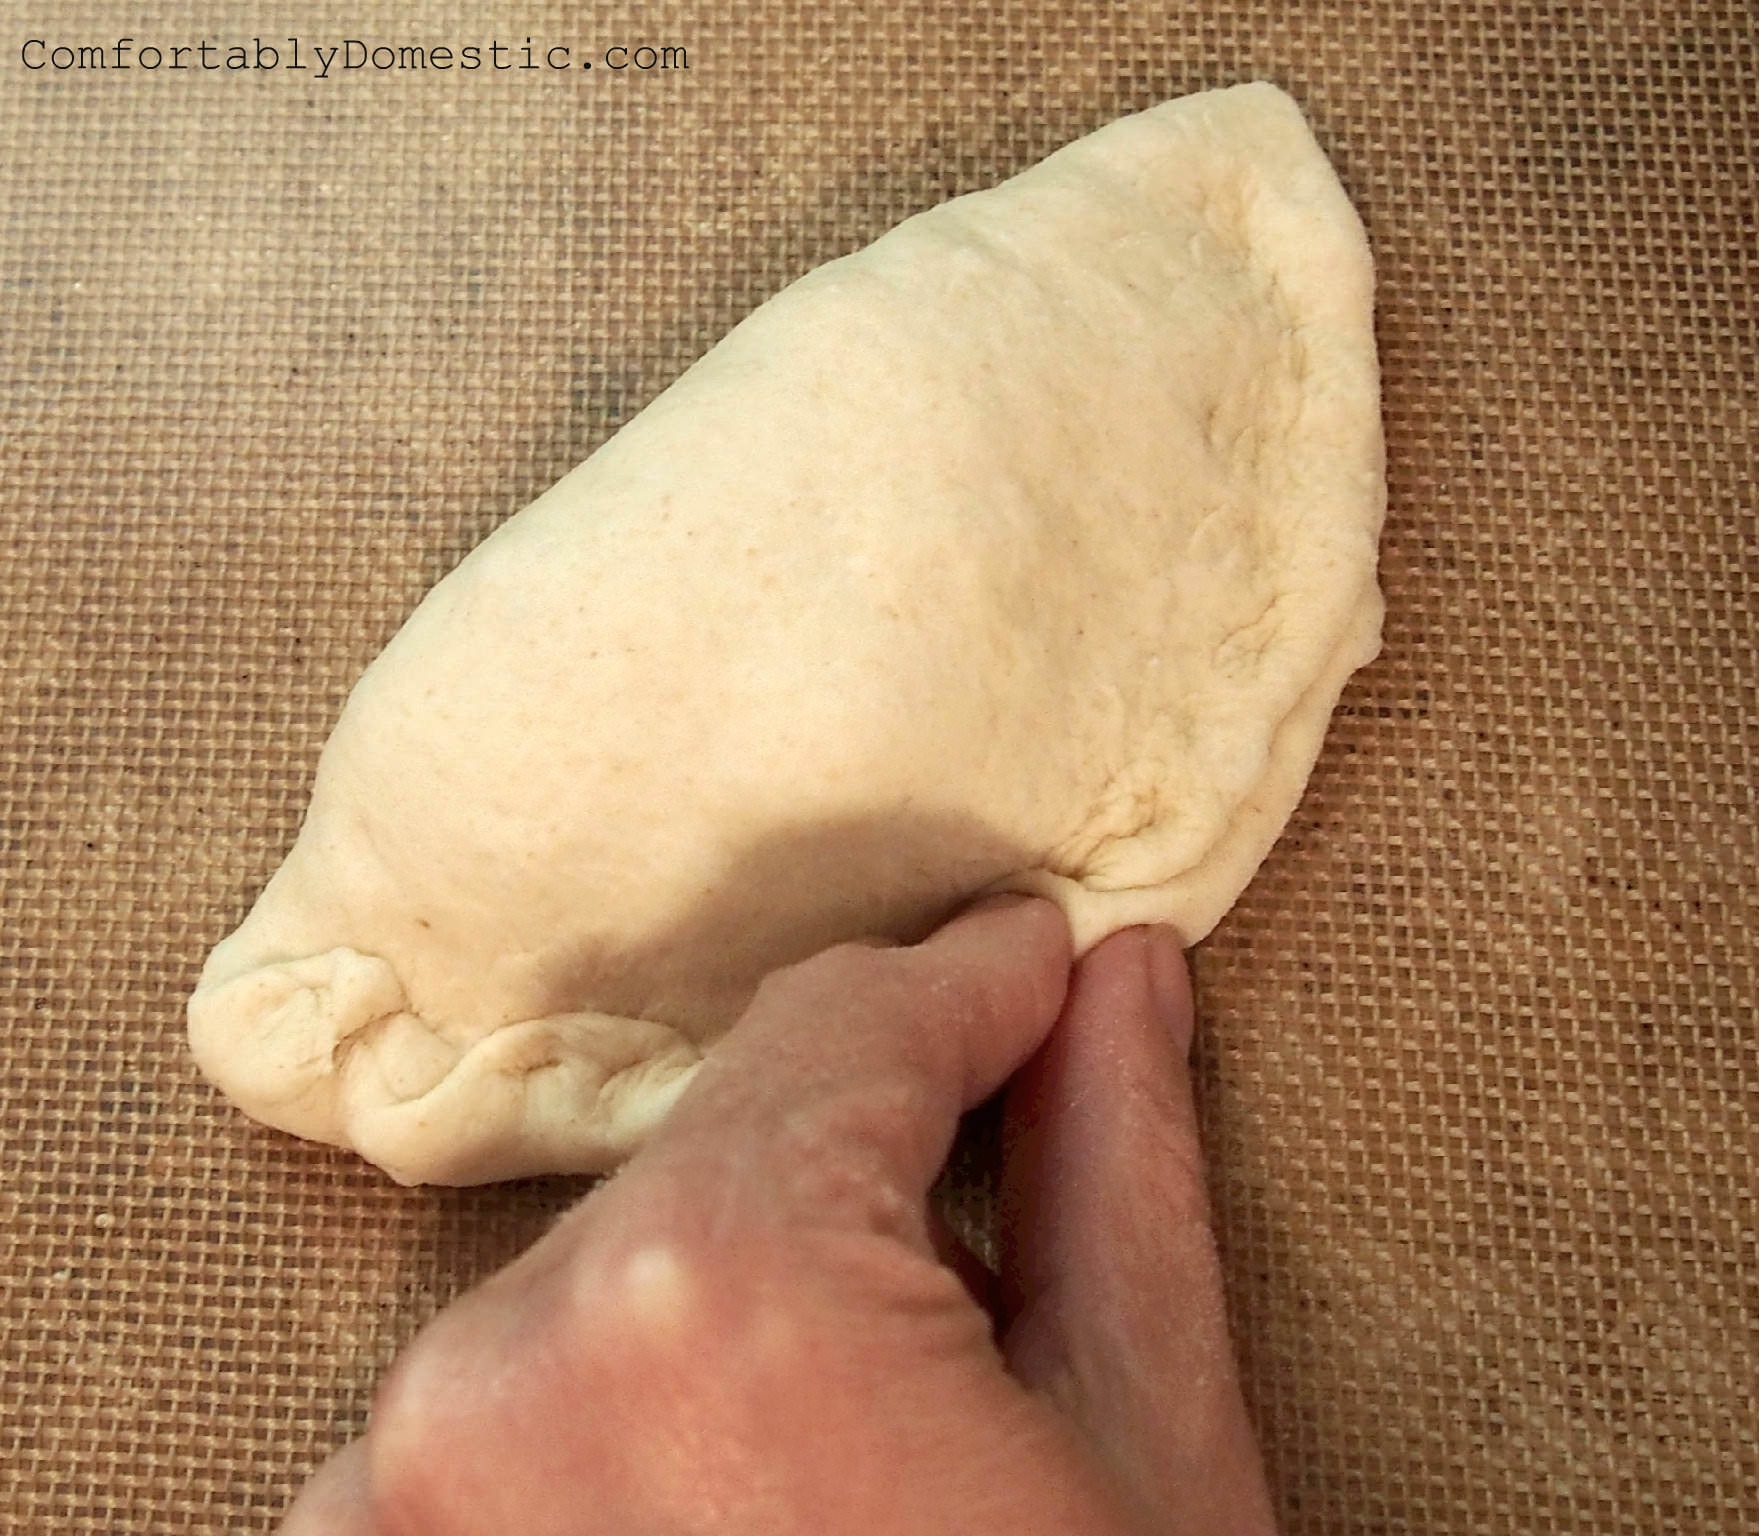 fold and crimp the dough